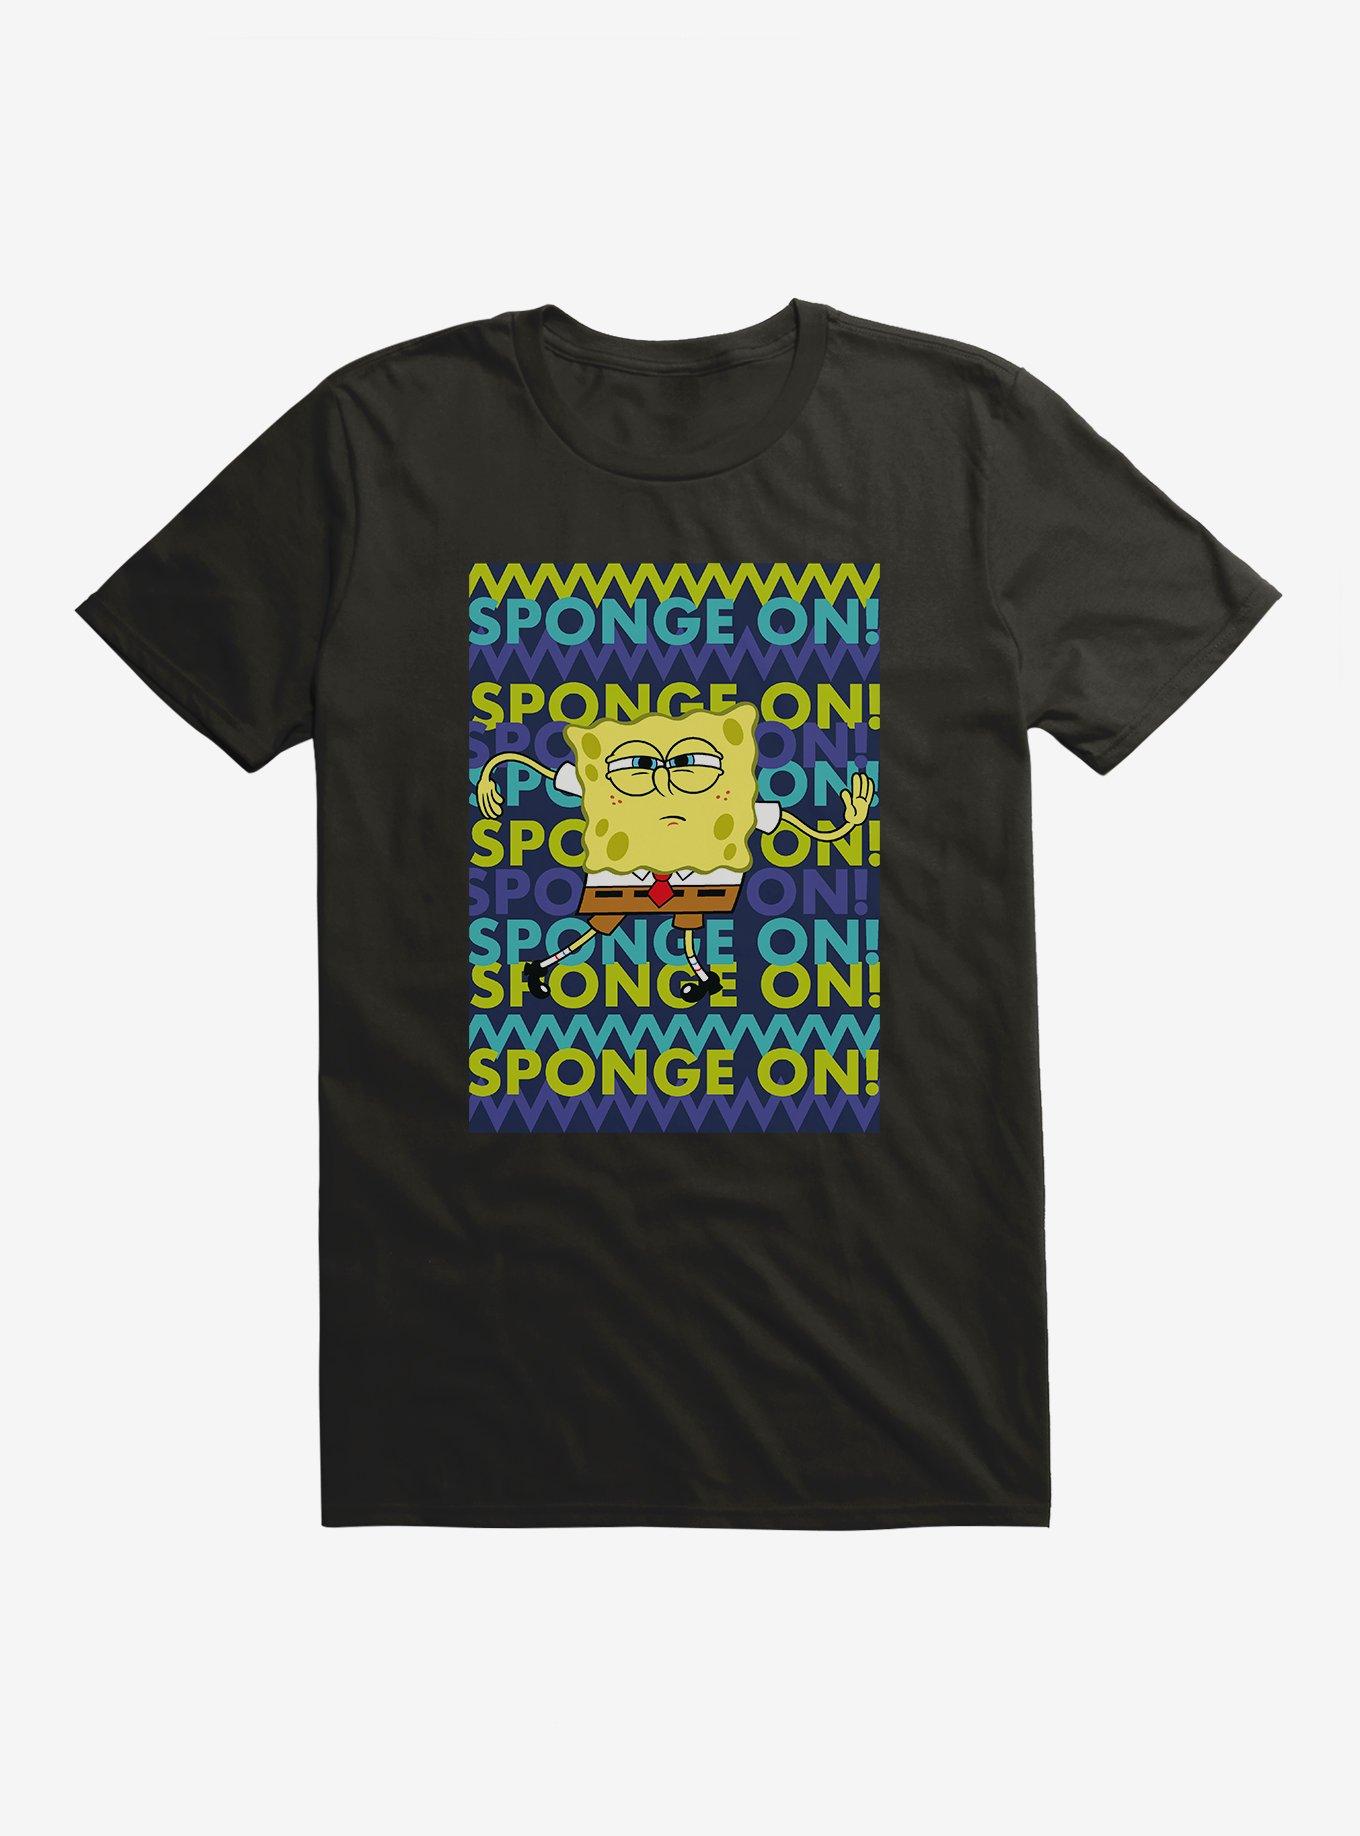 SpongeBob SquarePants Sponge On T-Shirt